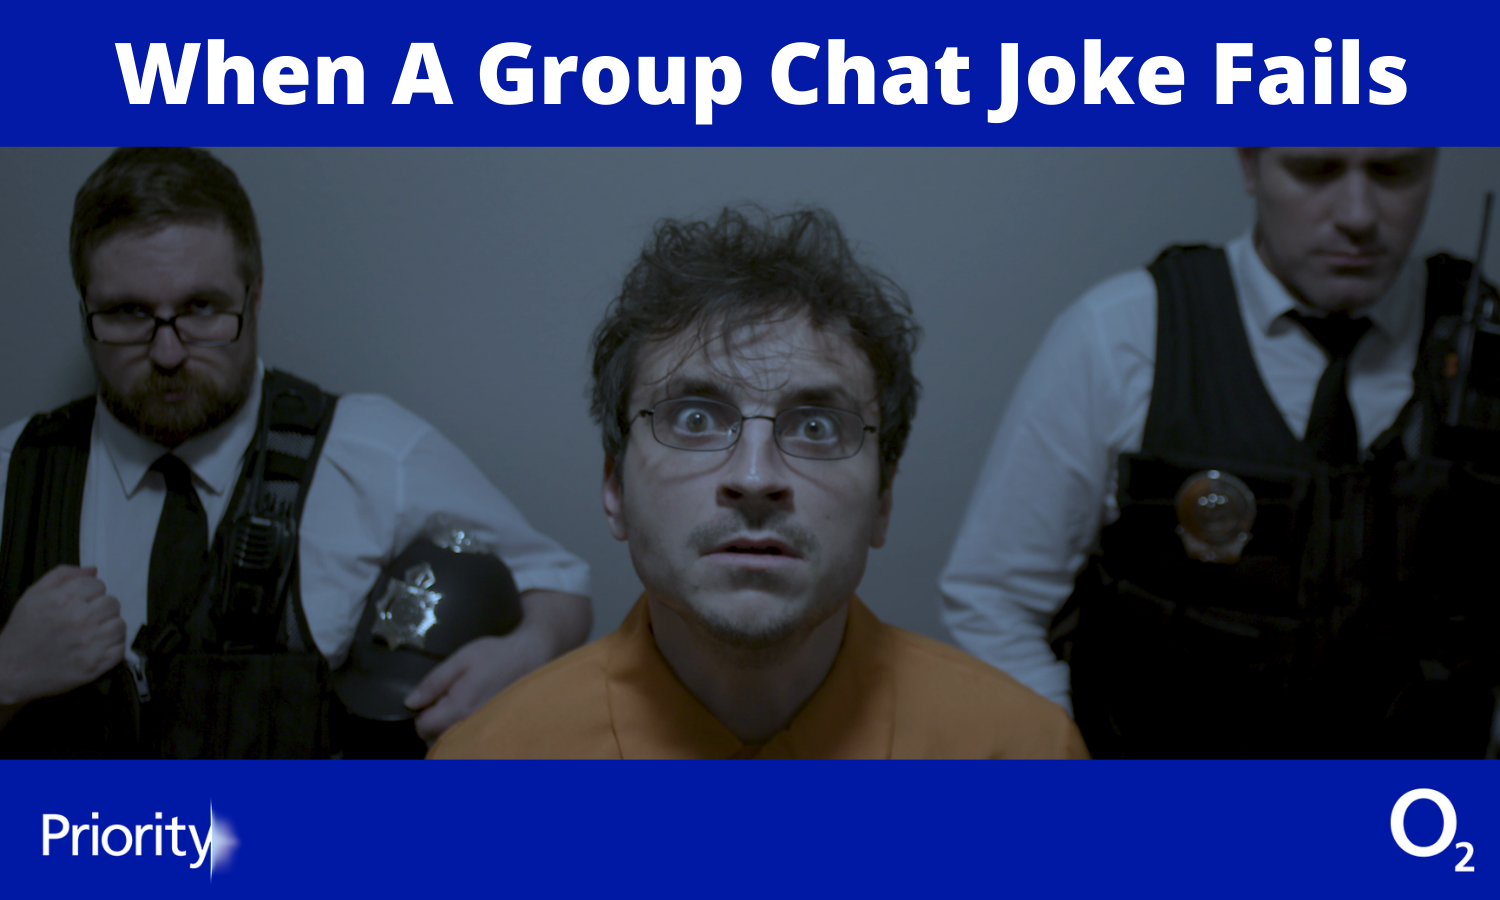 When a group chat joke fails